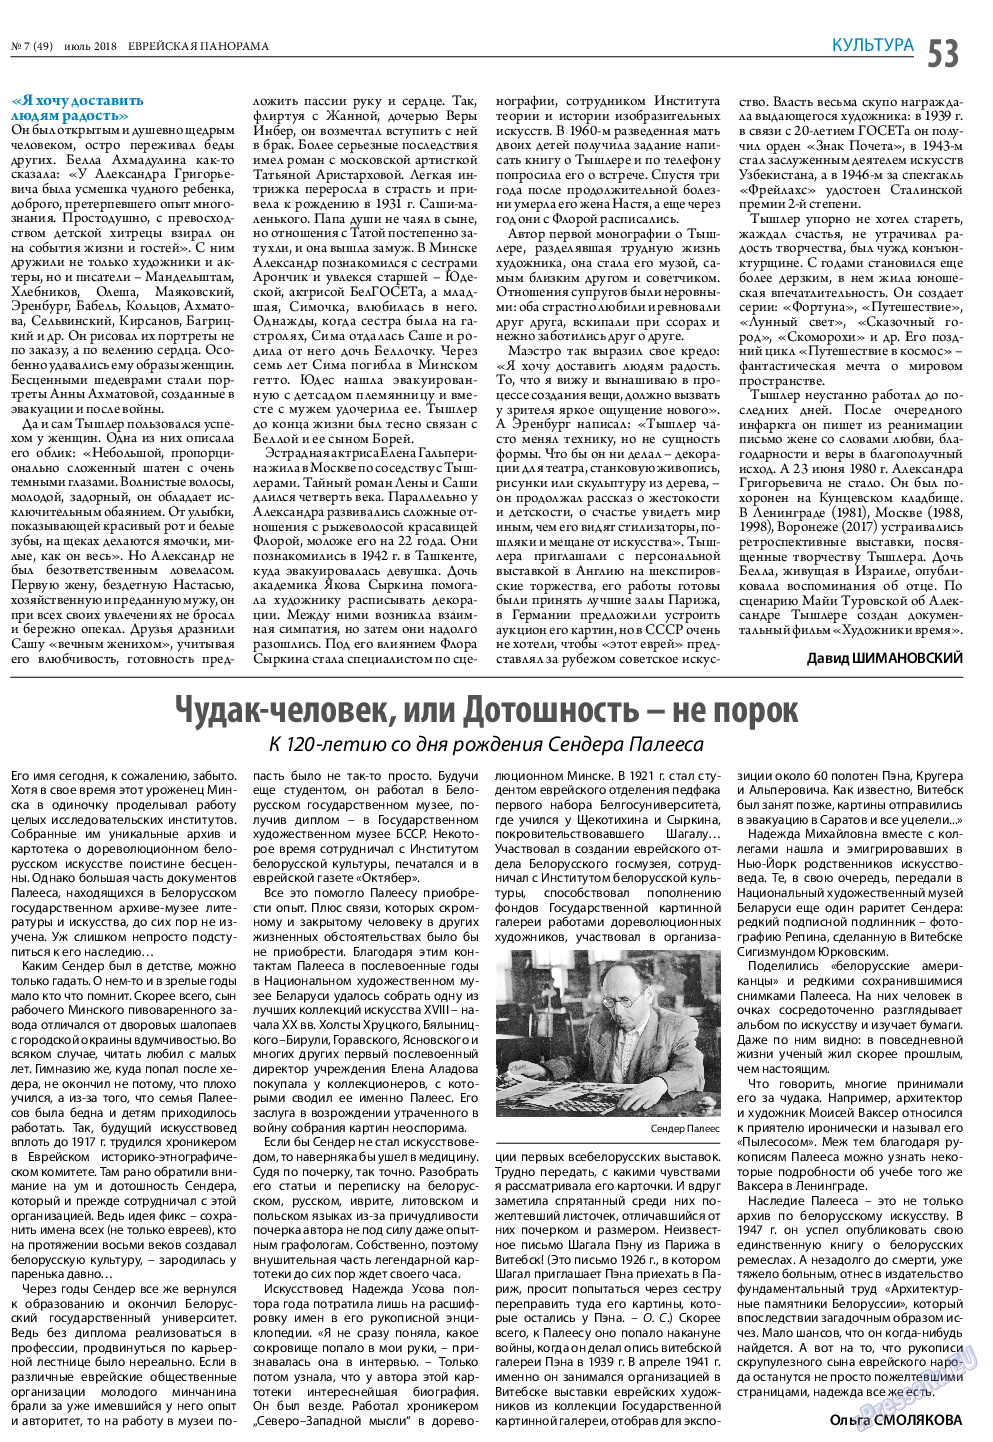 Еврейская панорама, газета. 2018 №7 стр.53